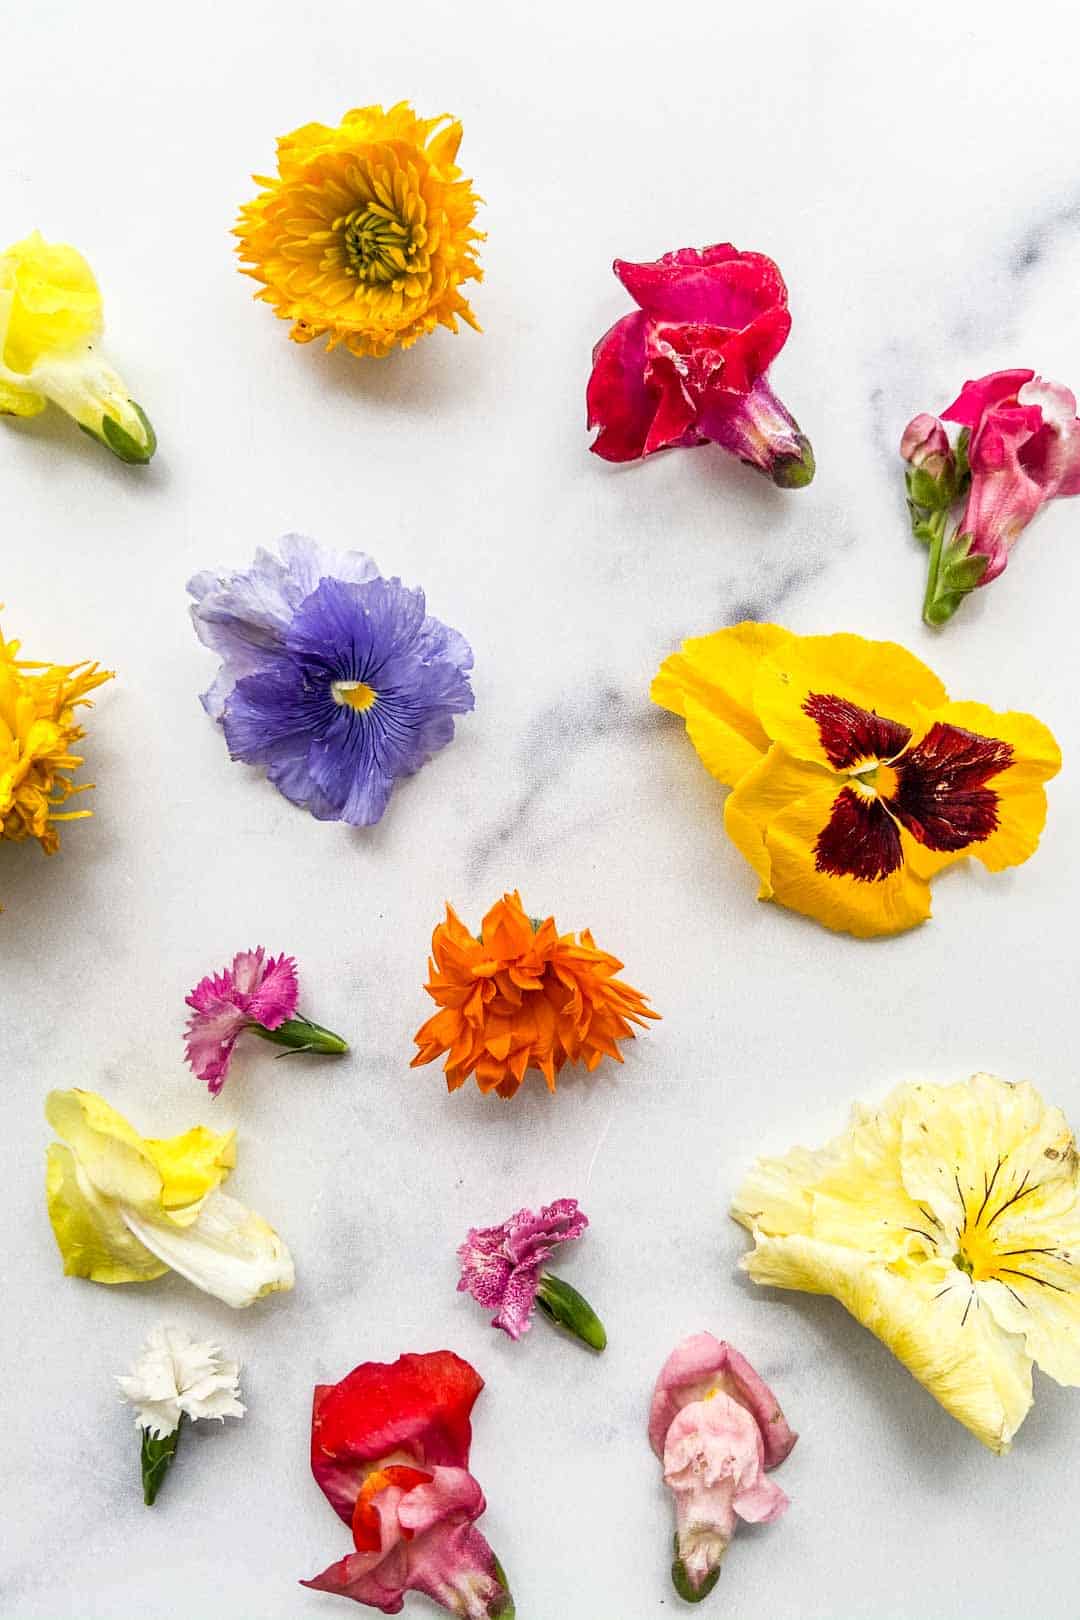 Freeze-Dried Edible Flowers (Flower Petals)